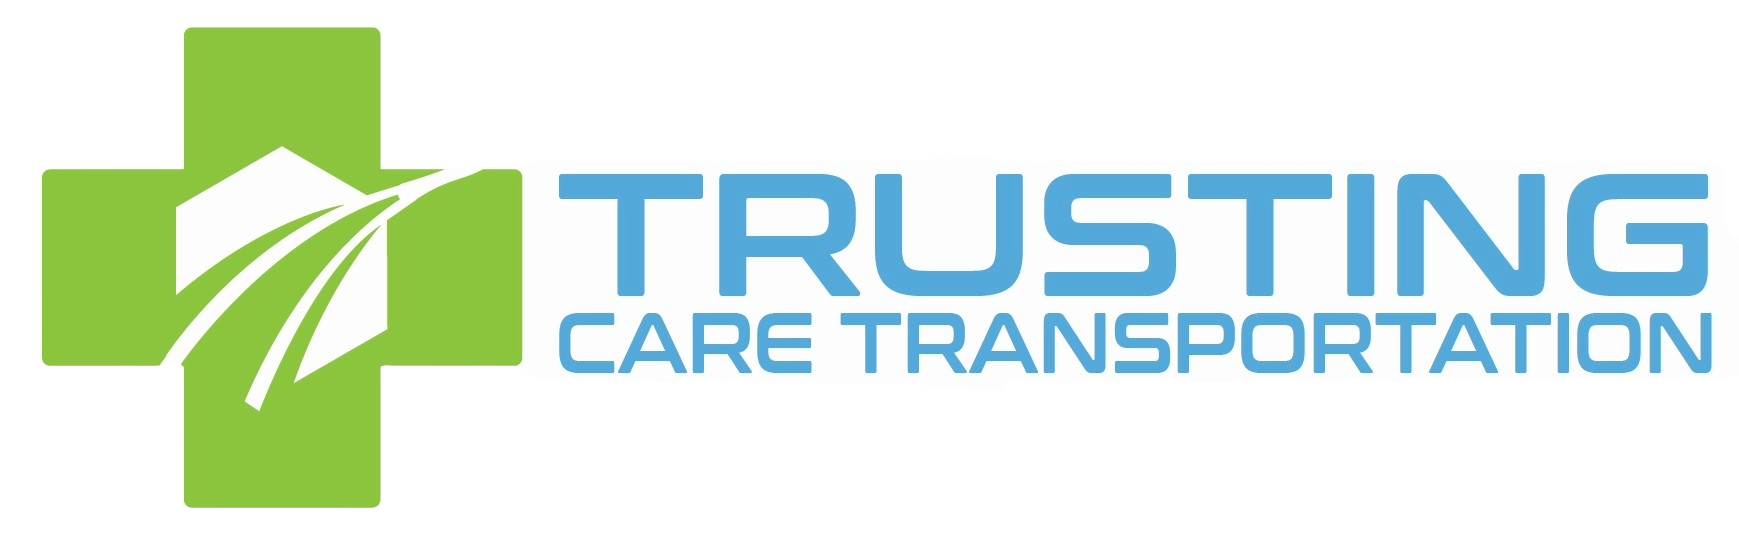 Trusting Care Transportation